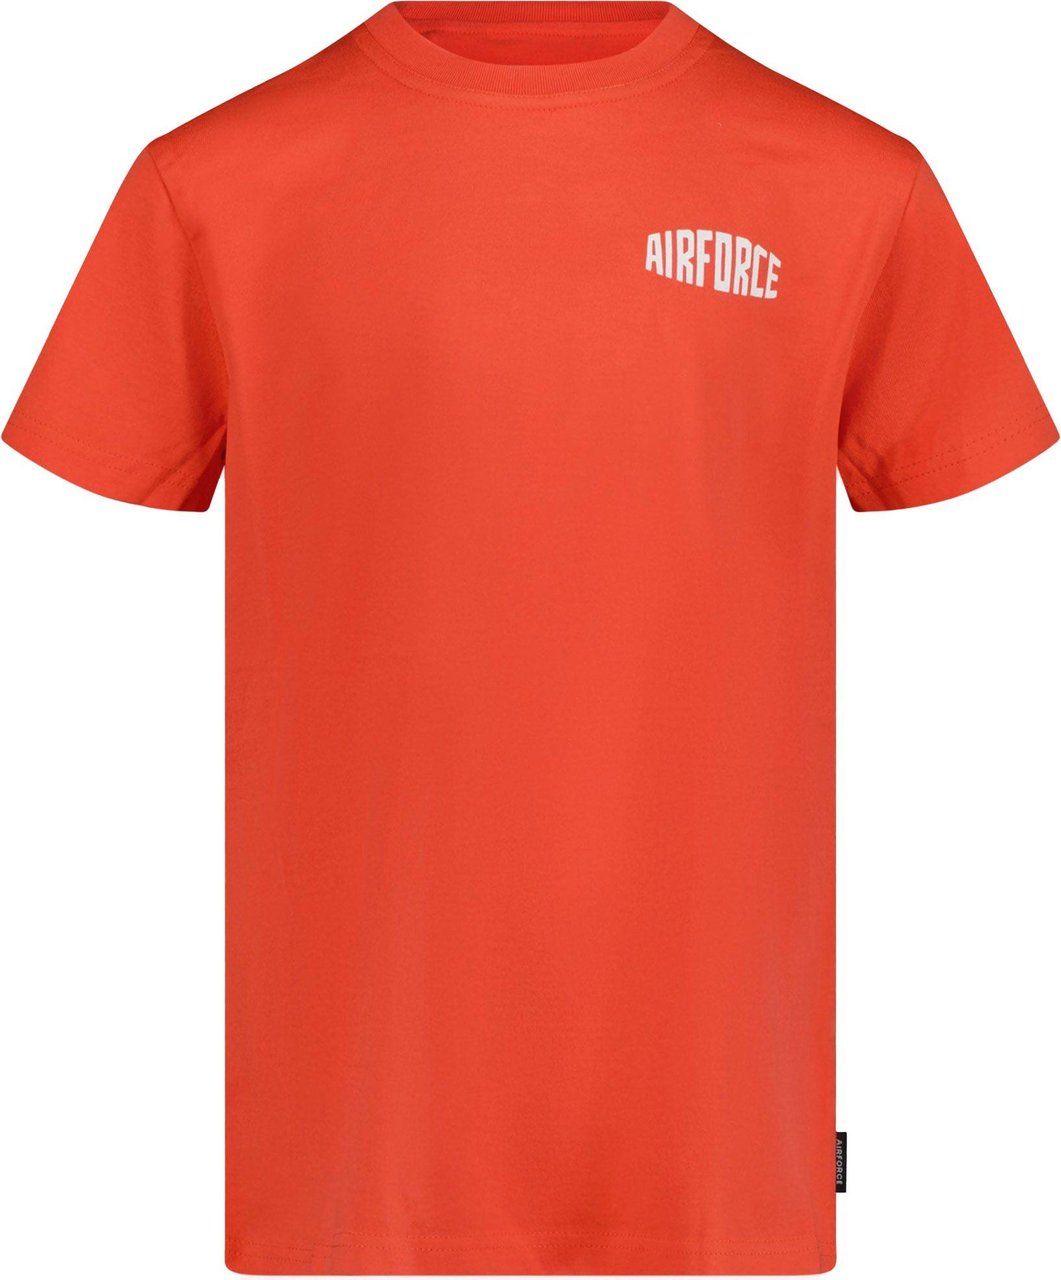 Airforce Airforce Kinder Jongens T-Shirt Oranje Oranje